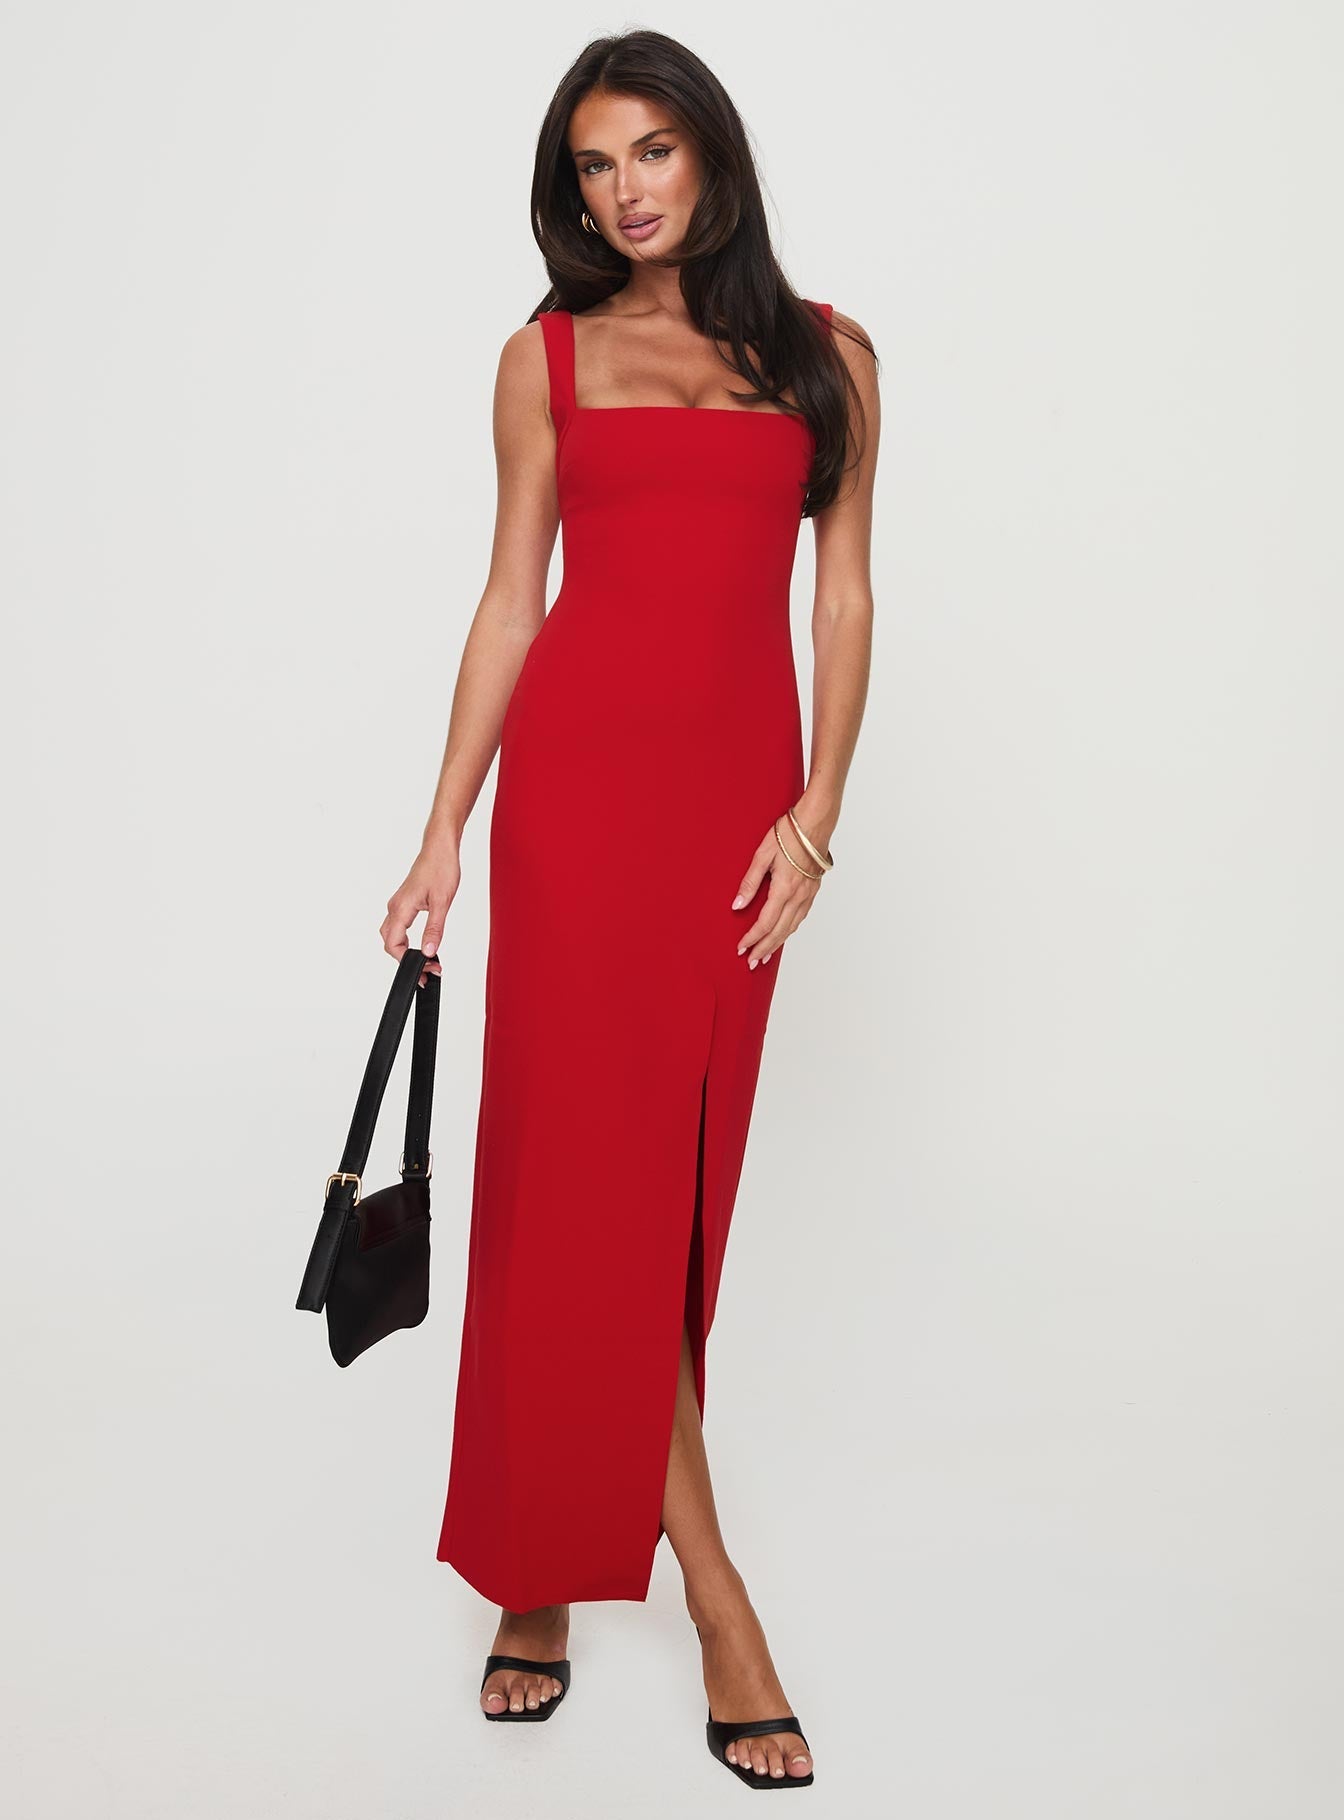 Shop Formal Dress - Bombshell Maxi Dress Red sixth image